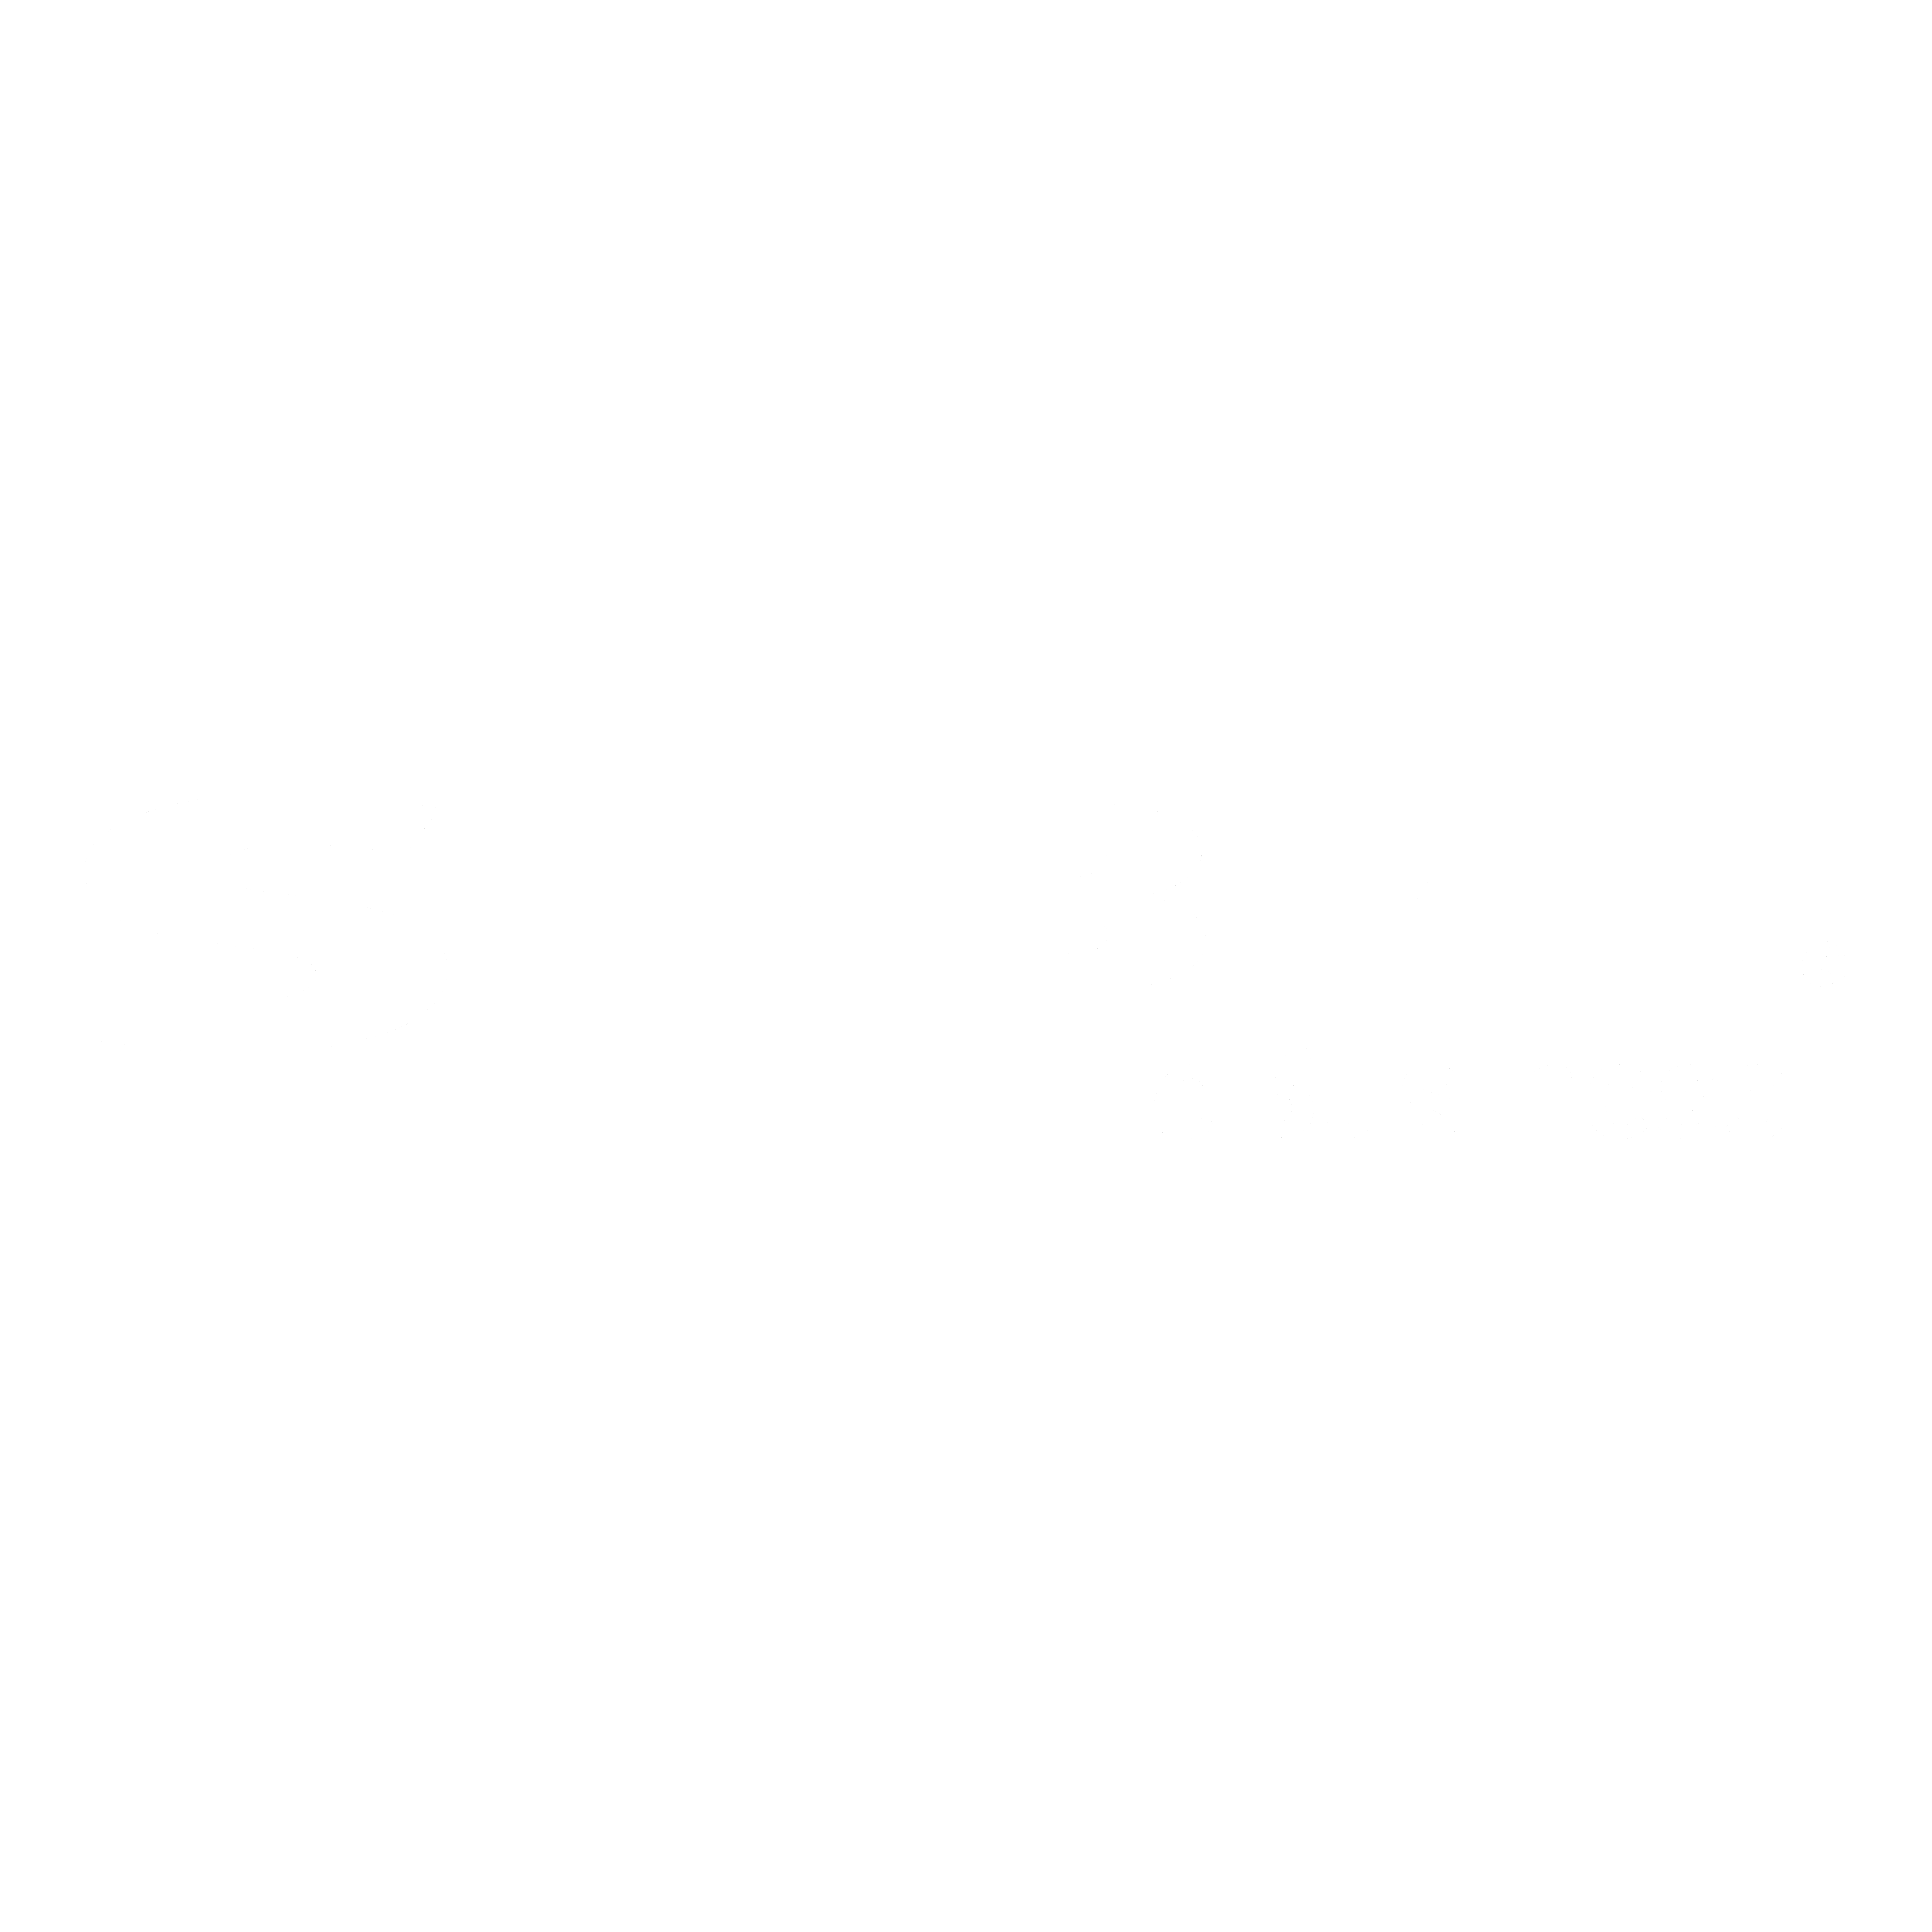 Siebel Logo - Siebel Logo PNG Transparent & SVG Vector - Freebie Supply